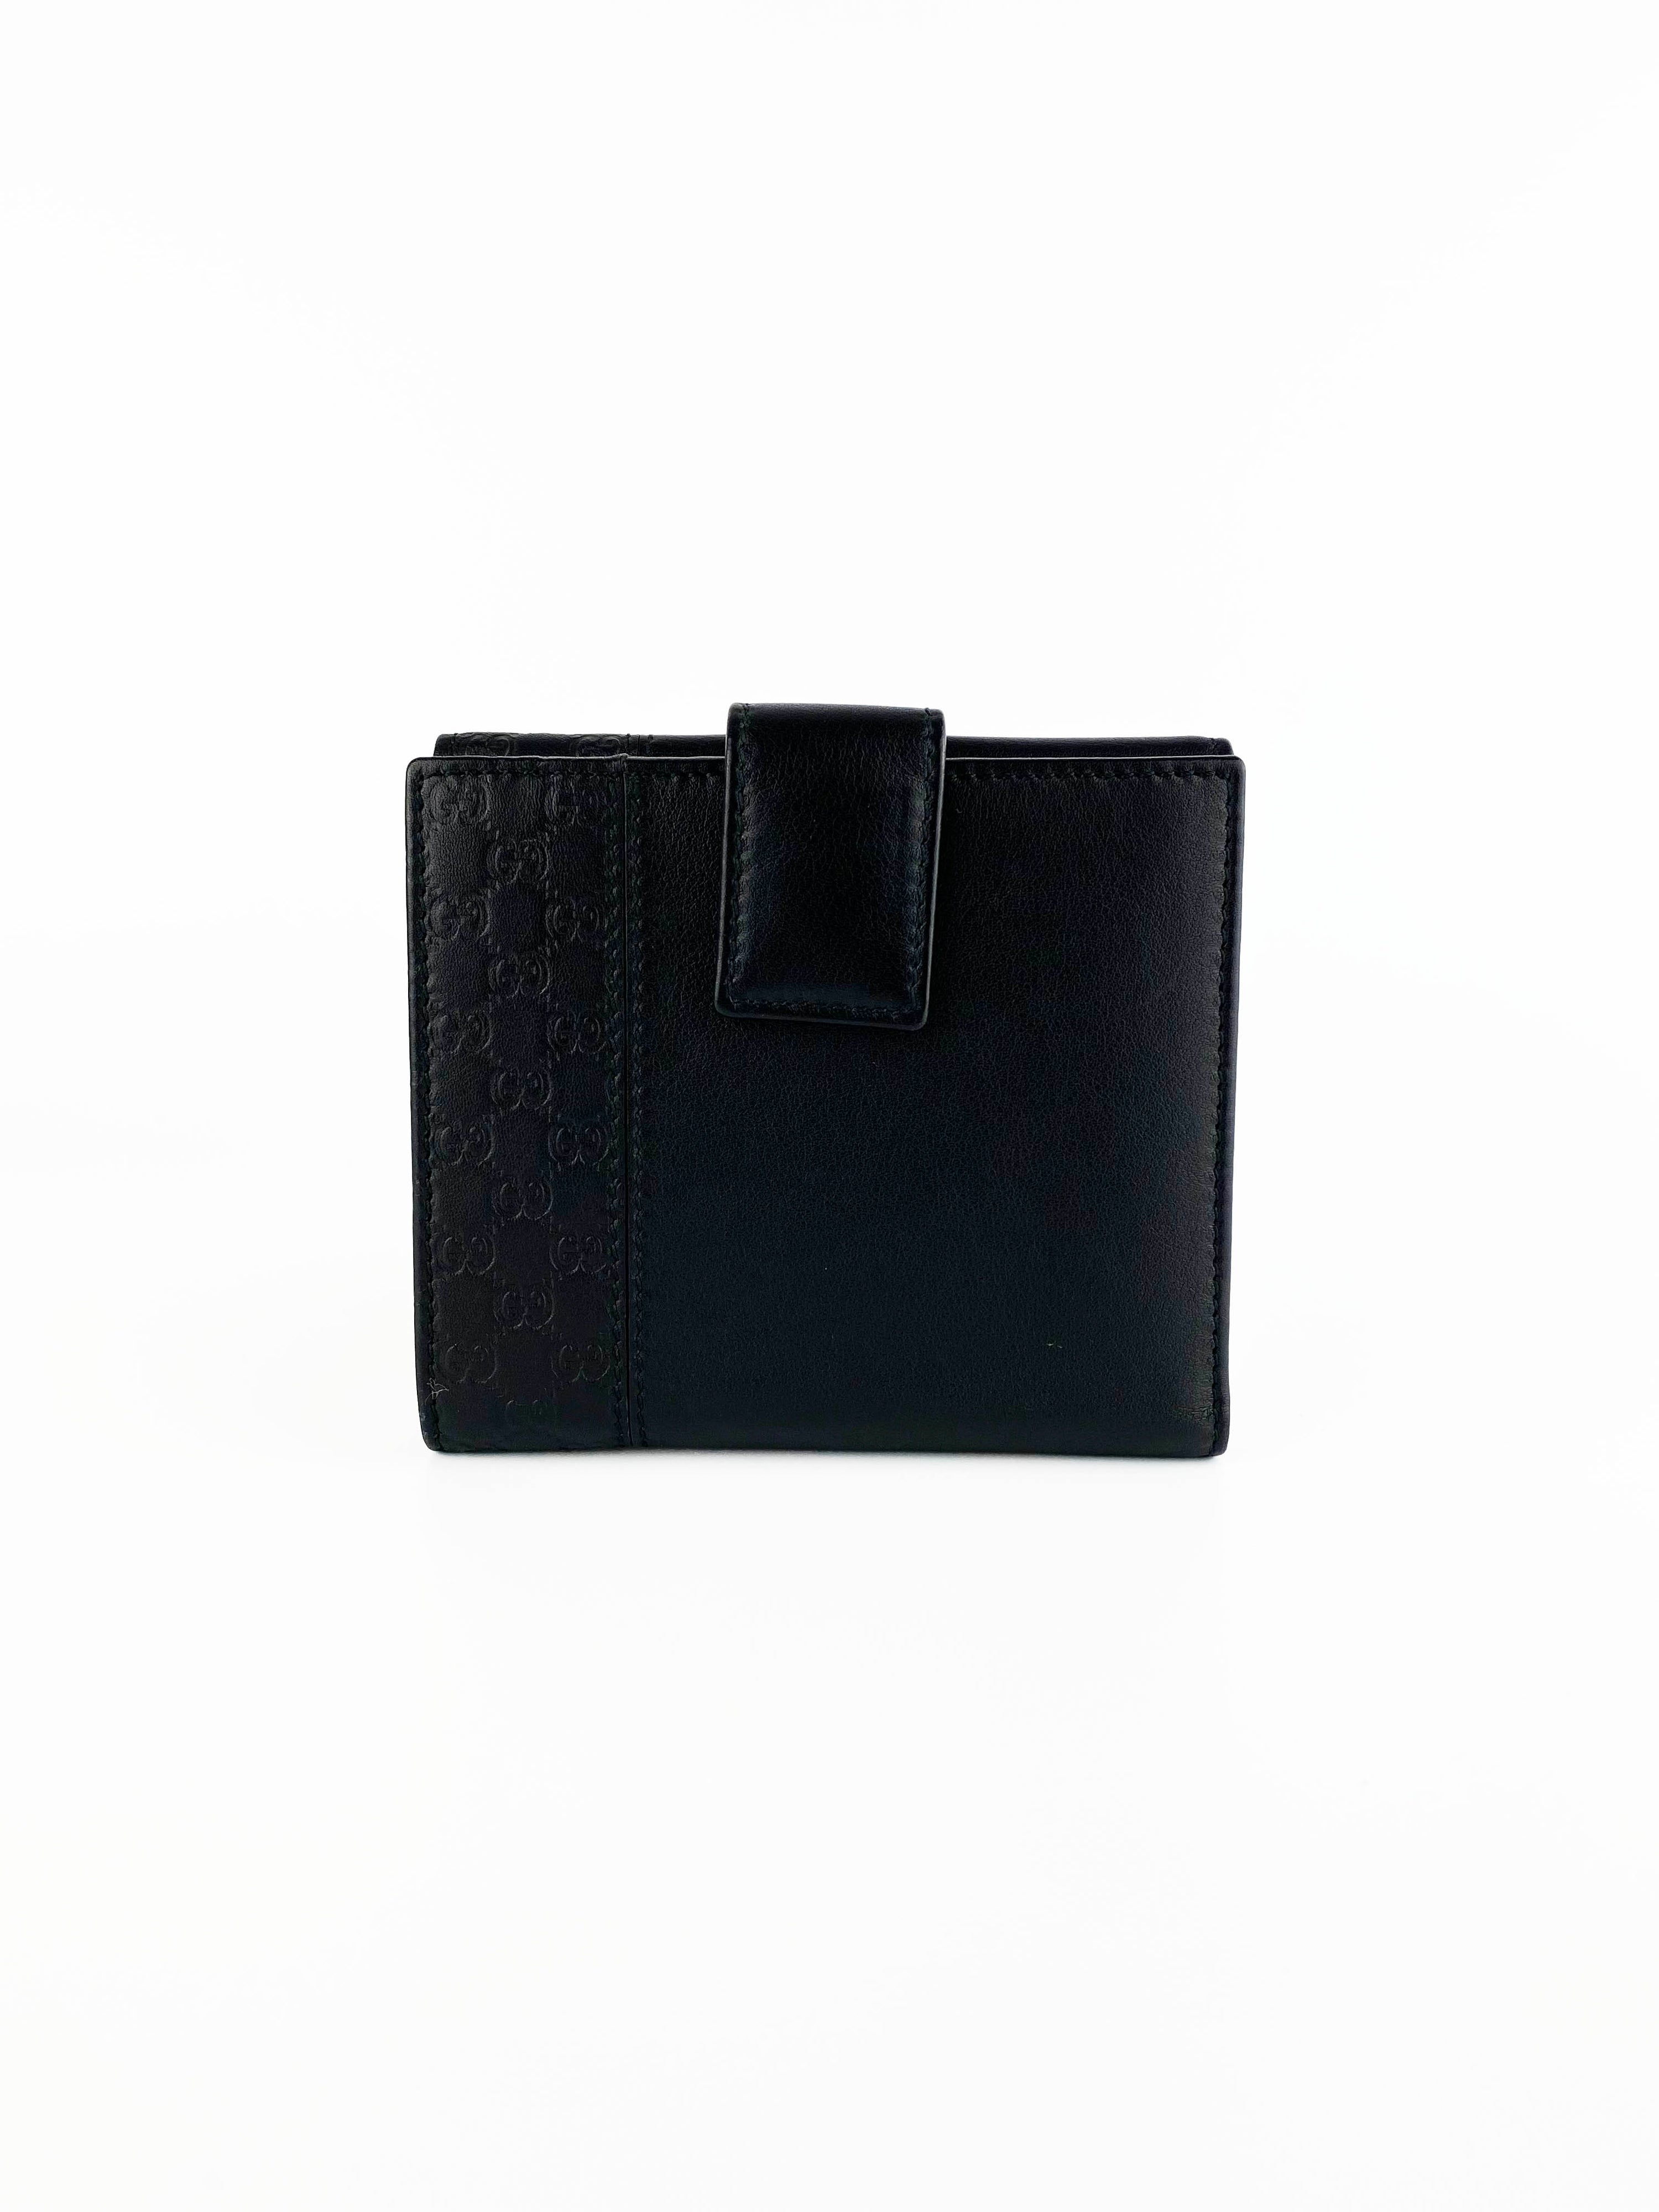 Gucci Black Compact Wallet